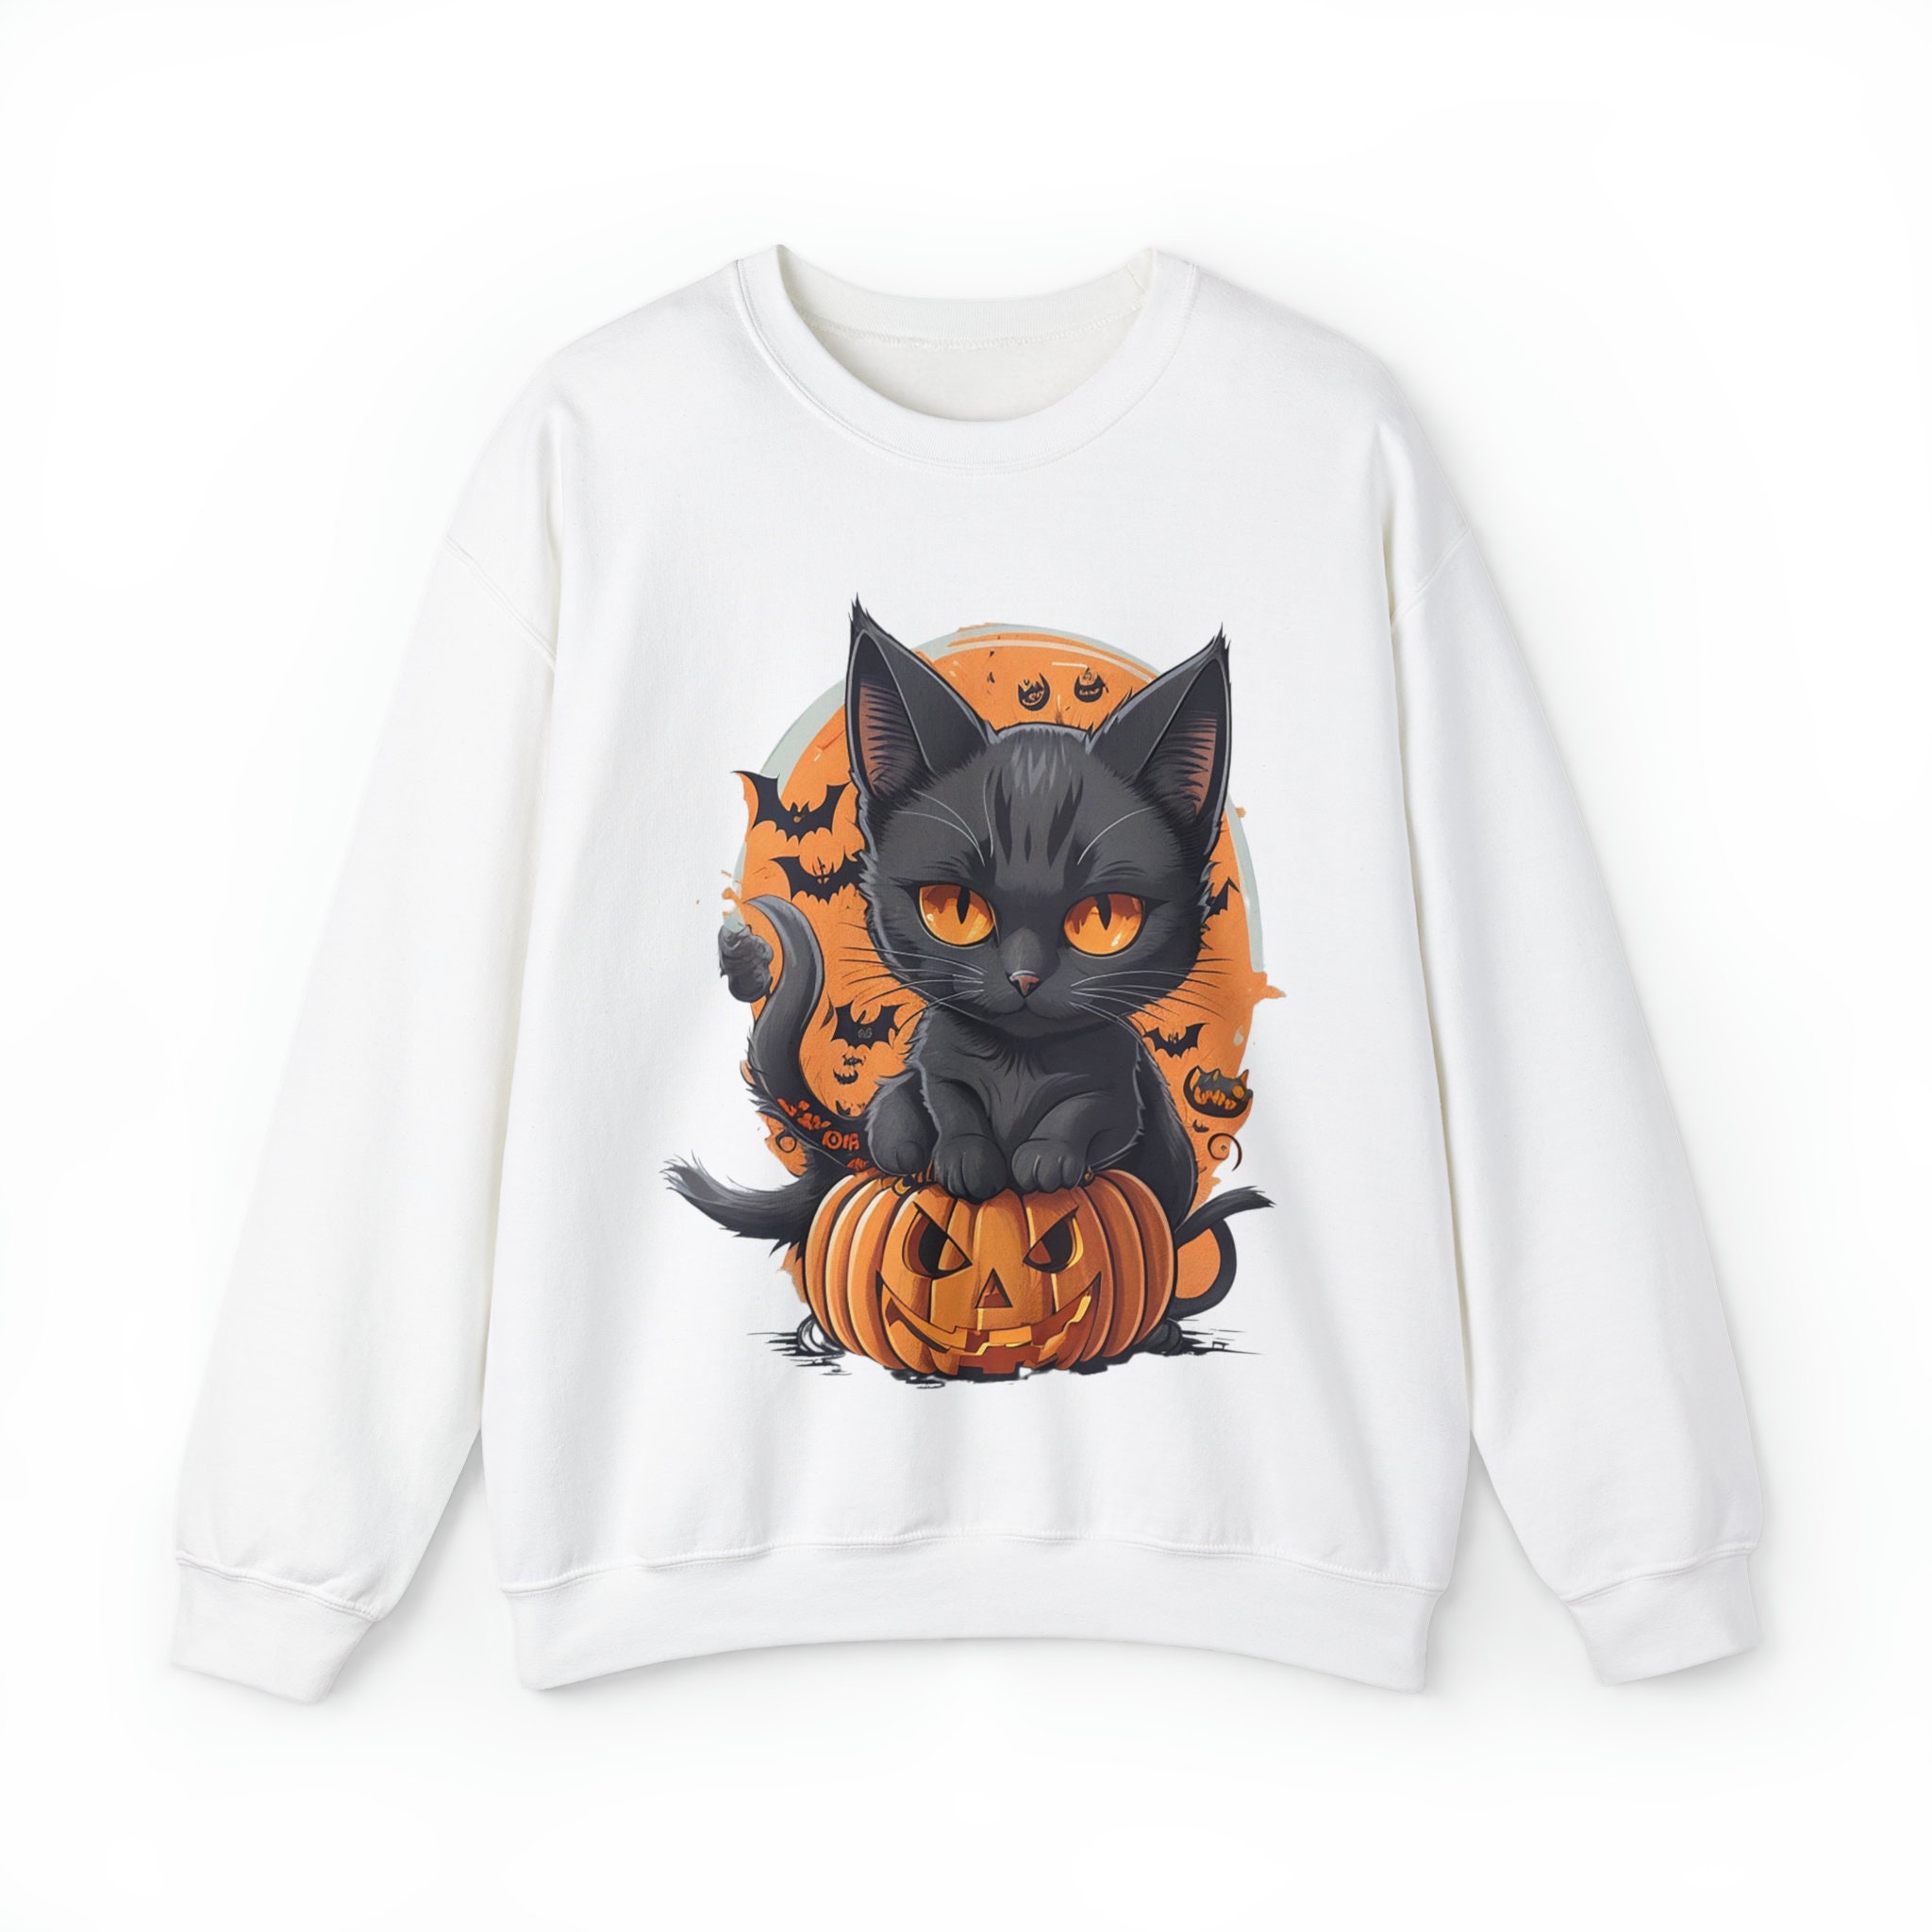 Discover Black Cat on Pumpkin Halloween Jumper Black Cat Sweatshirt Autumn Shirt Jumper Pumpkin Witch Jumper Autumn Sweatshirt